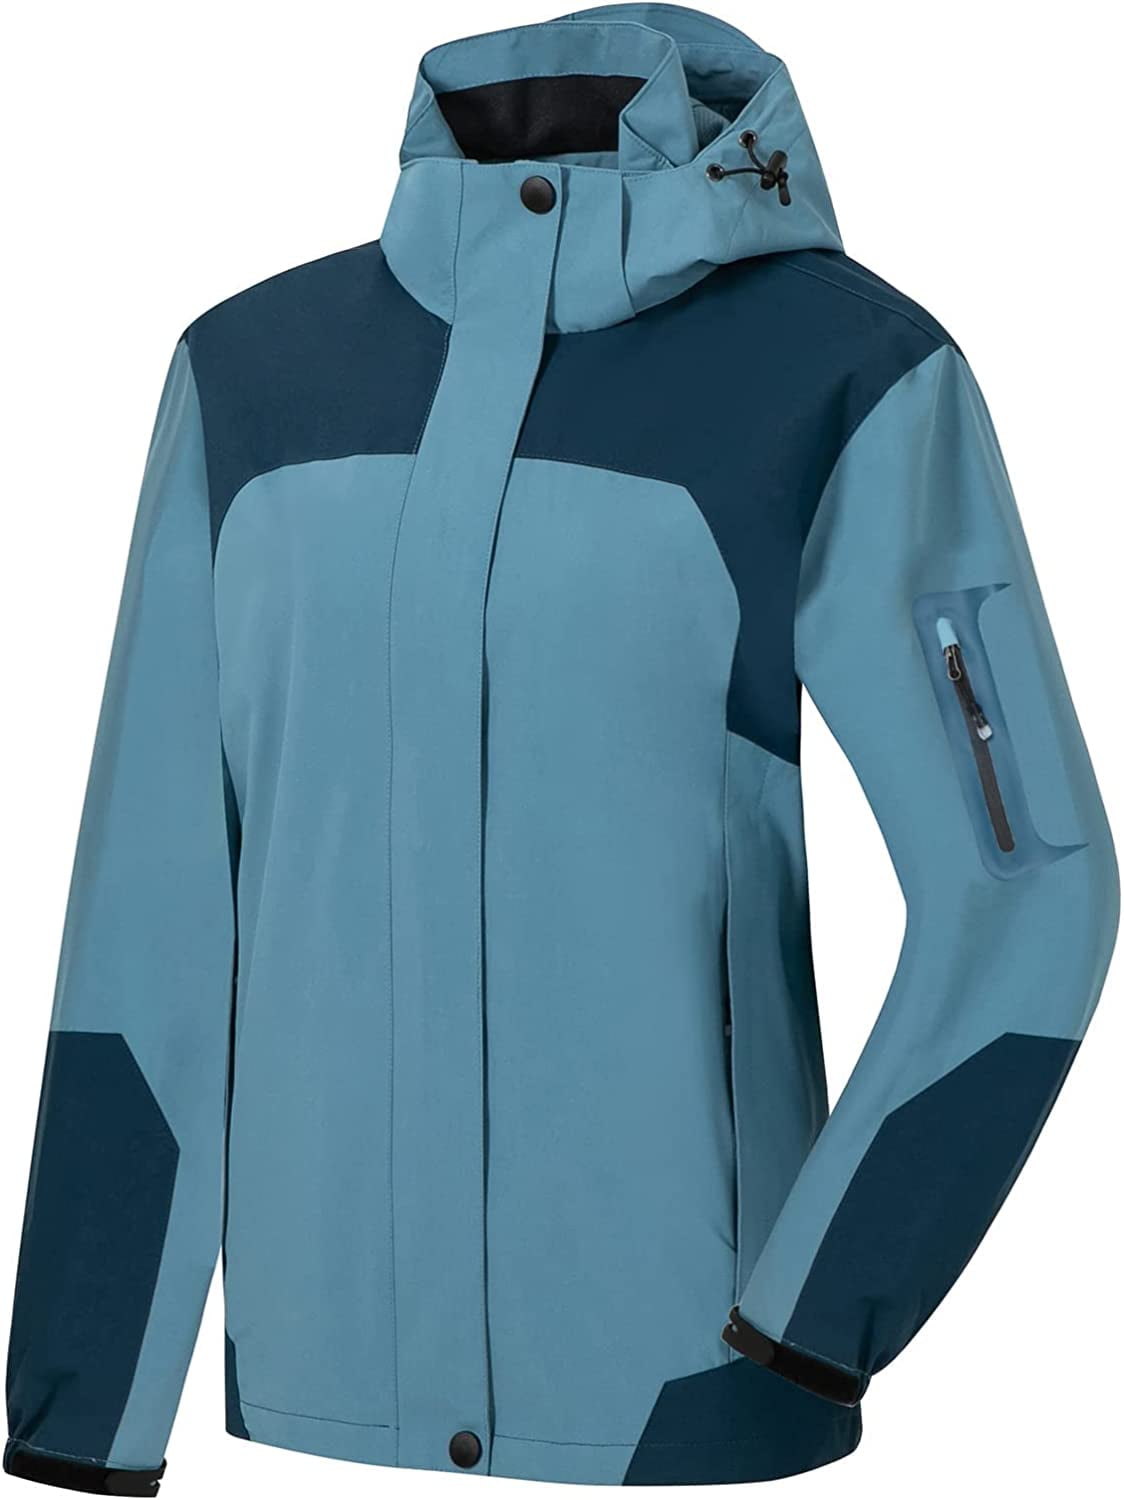 SaphiRose Womens Waterproof Rain jacket Lightweight Active Outdoor Raincoat  with Removable Hood